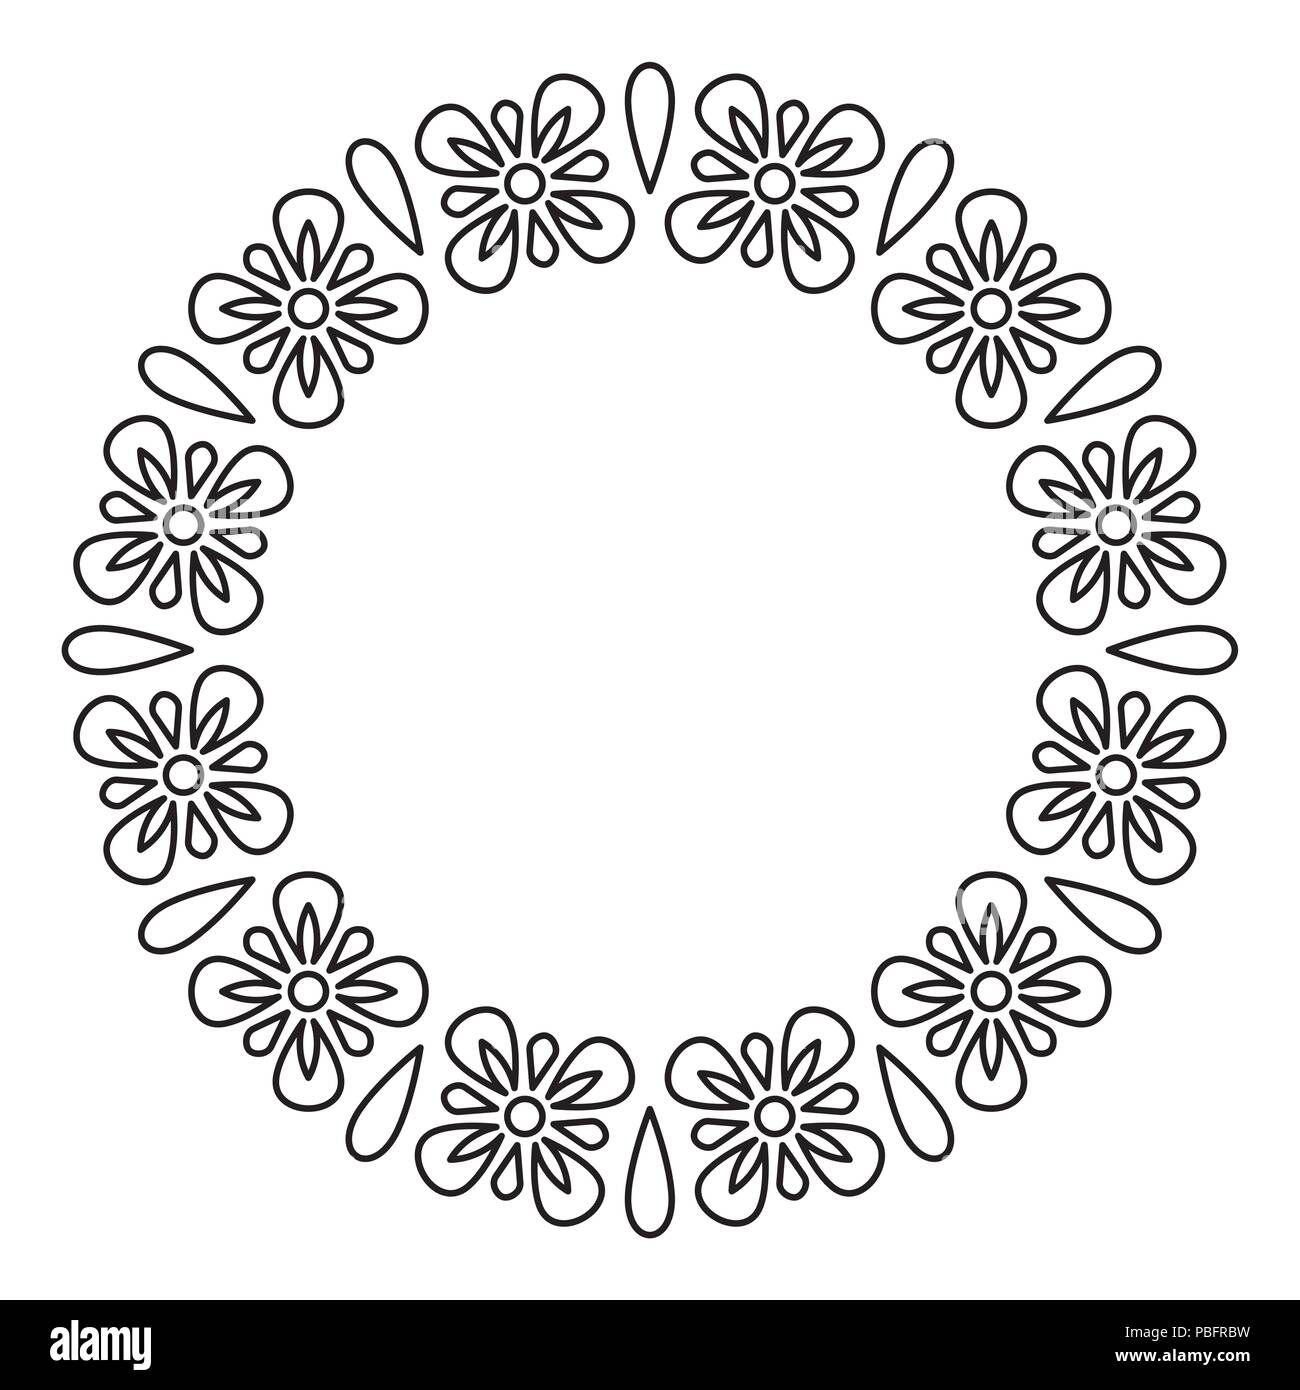 Outline Flowers Circle Frame Design Monochrome Floral Border